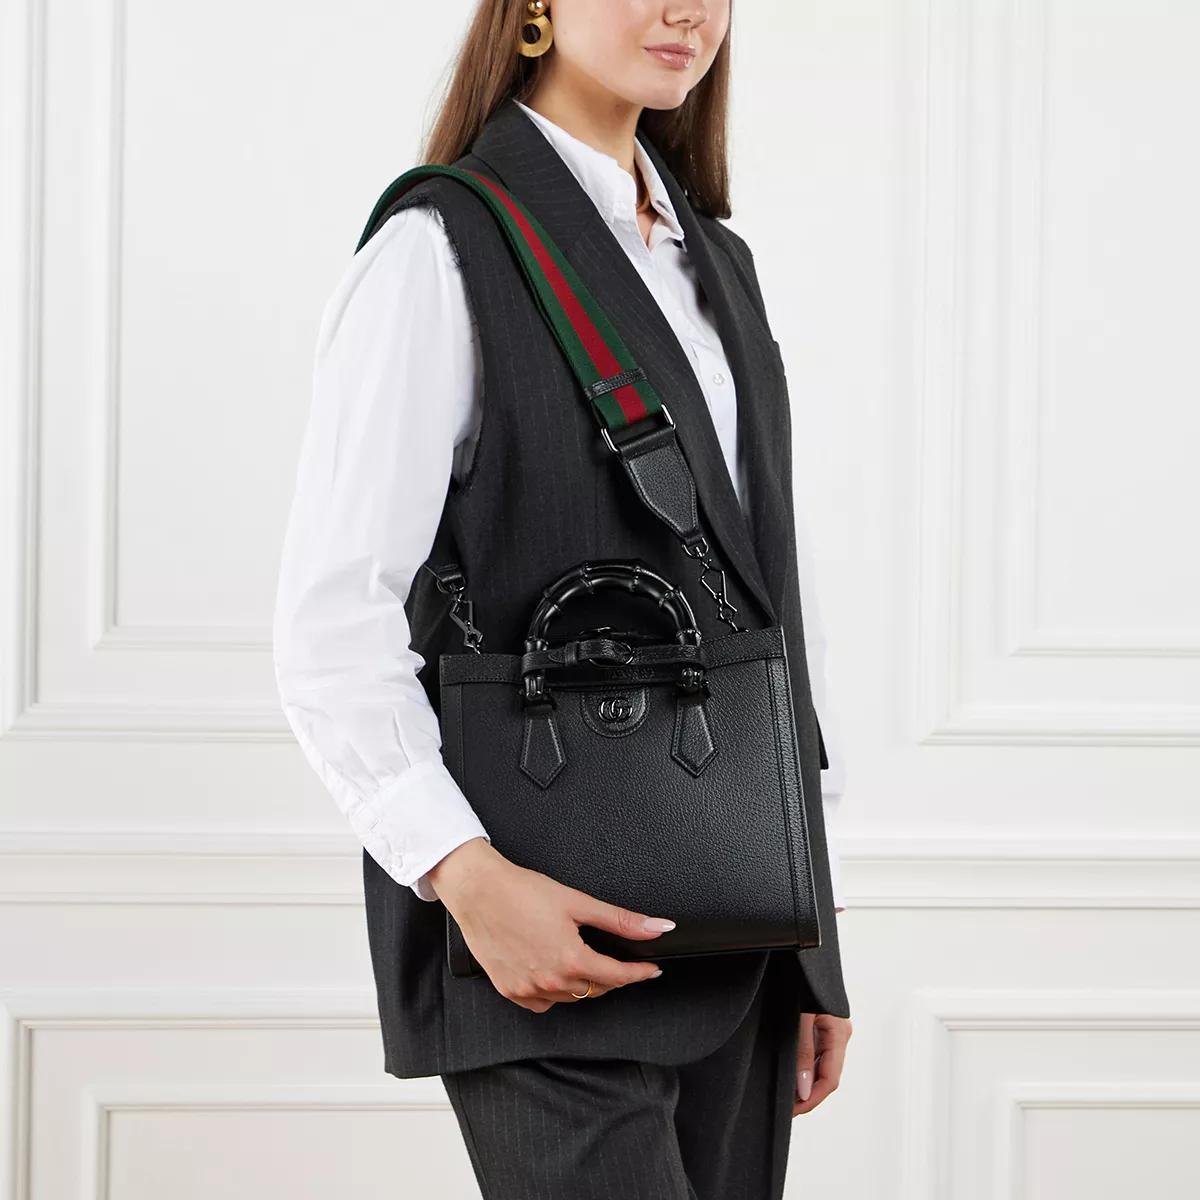 Gucci Totes Diana Small Tote Bag in zwart